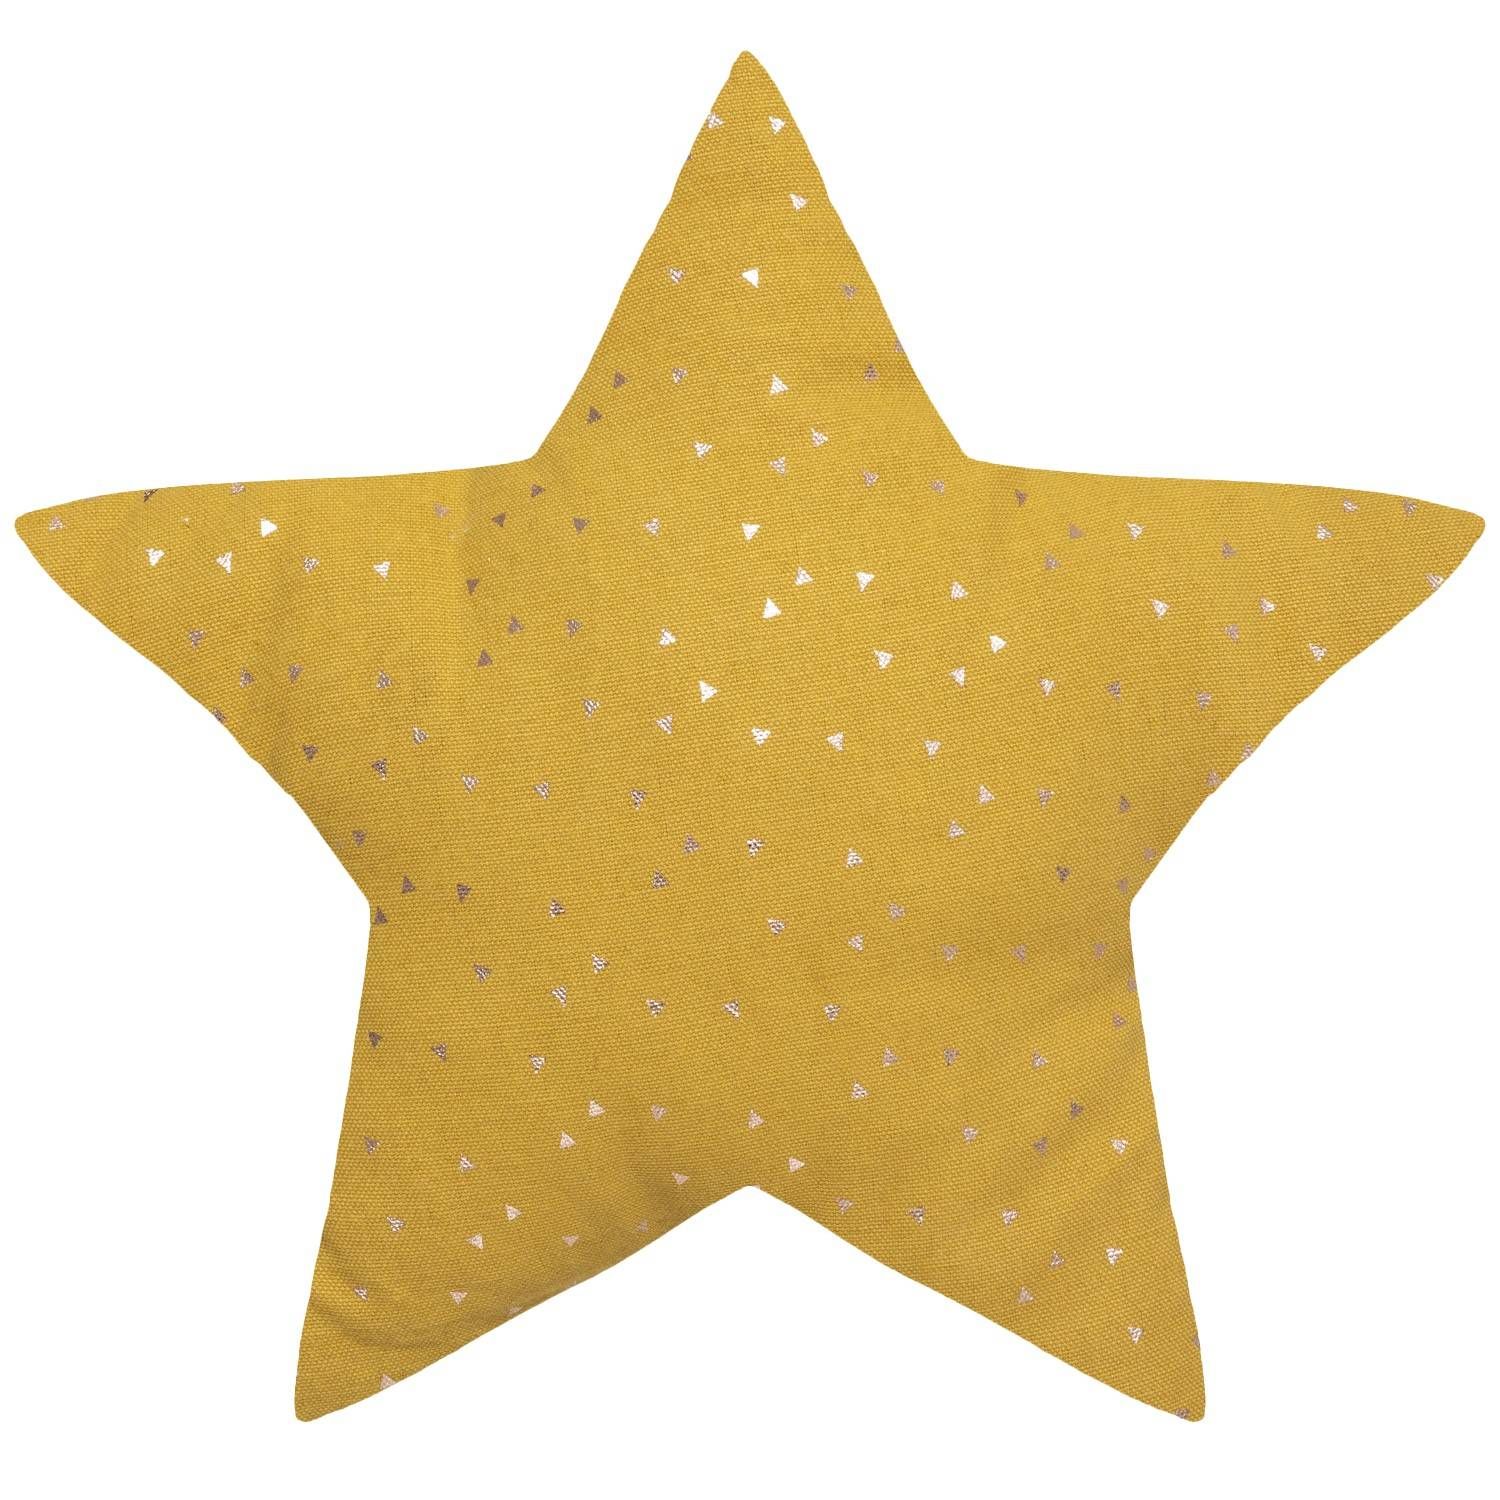 Atmosphera for kids Dekorační polštář ve tvaru hvězdy, žlutý, bavlna, 28 x 45 cm - EMAKO.CZ s.r.o.